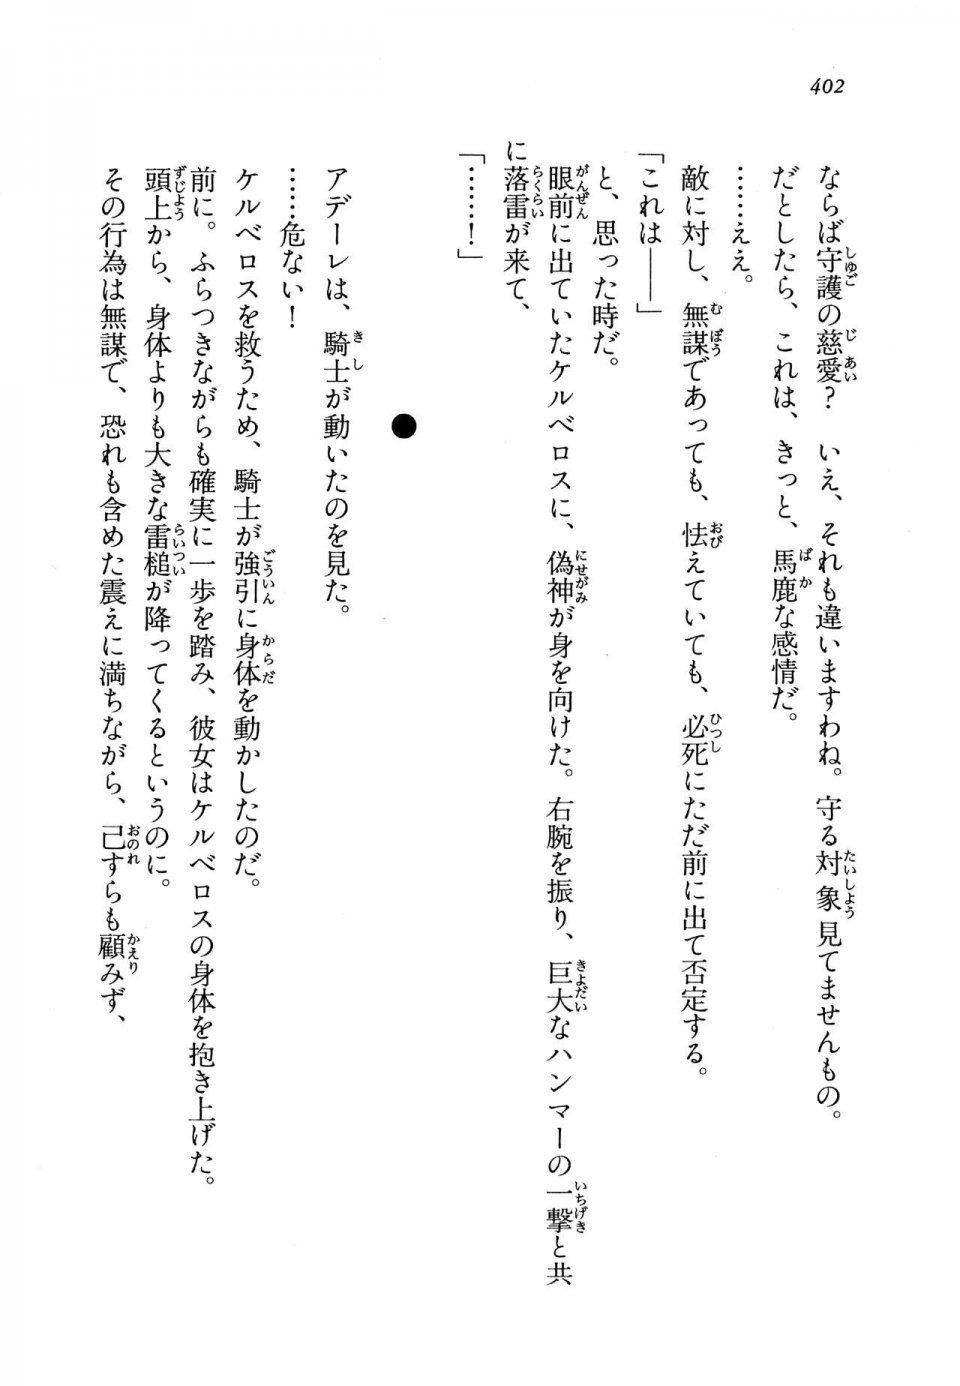 Kyoukai Senjou no Horizon BD Special Mininovel Vol 8(4B) - Photo #406